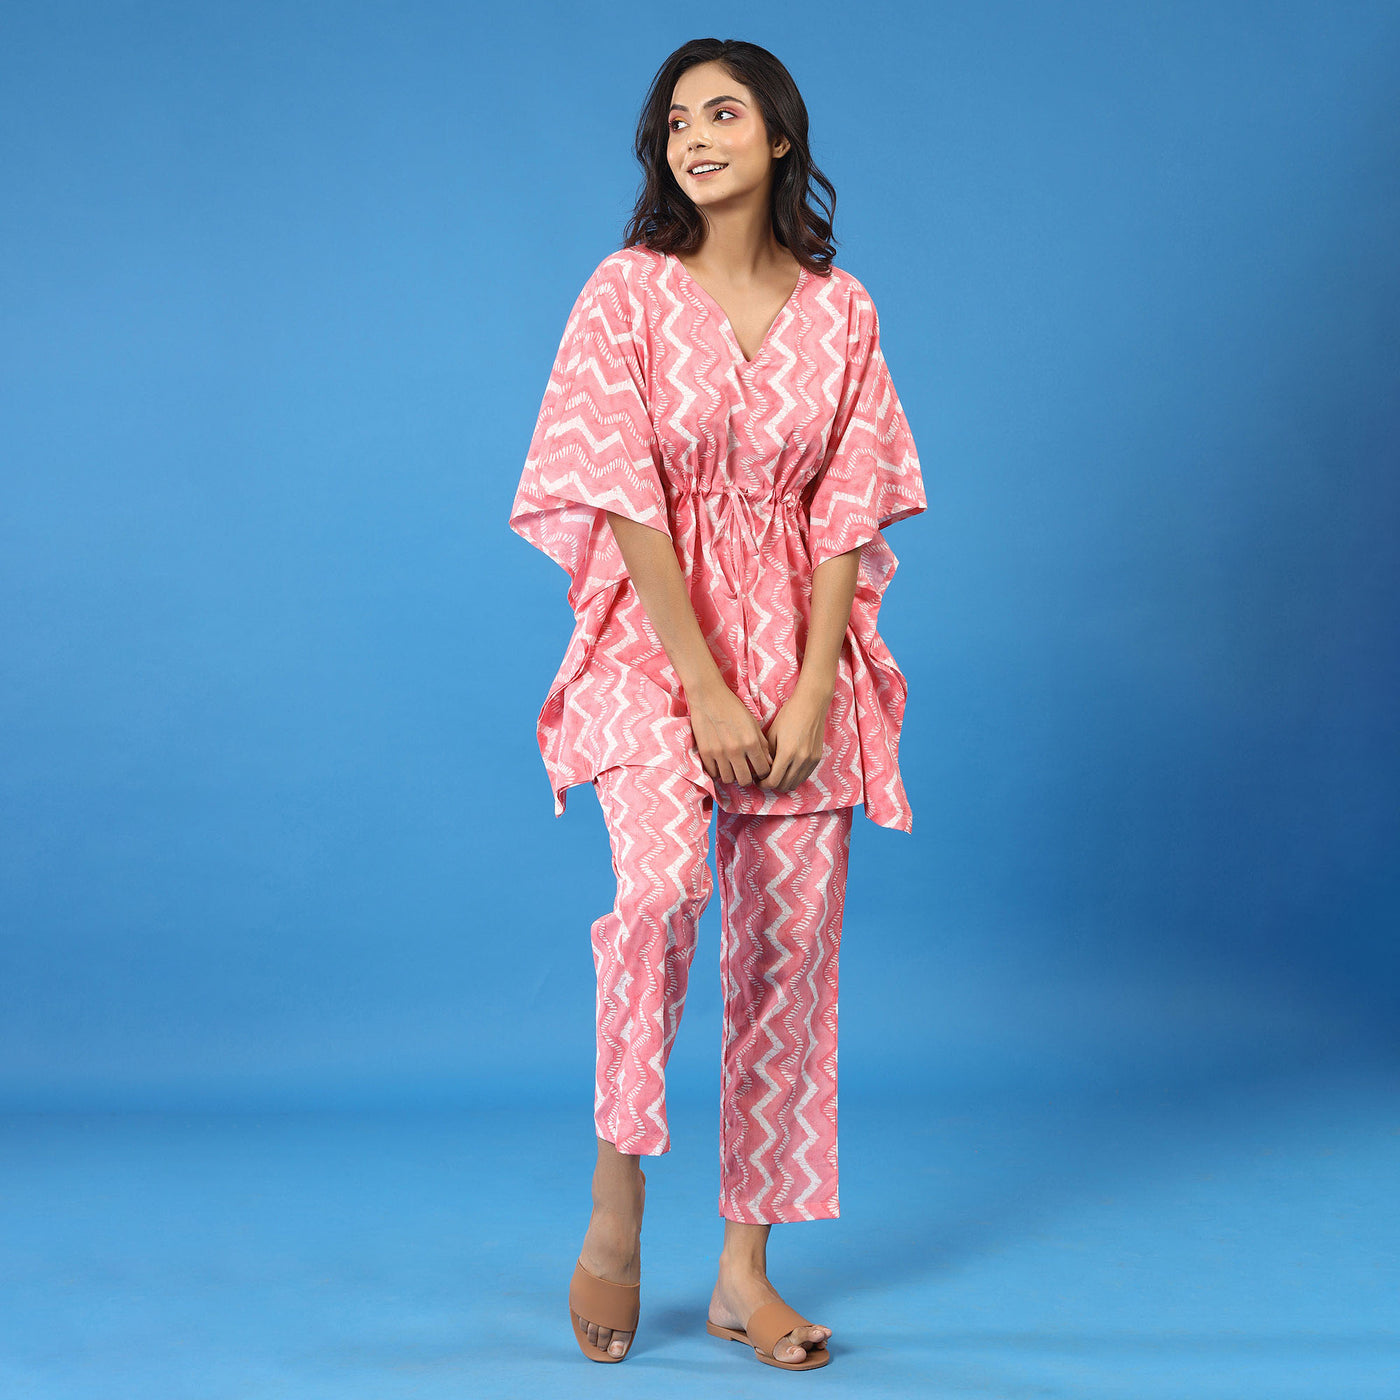 Glitched Stripes on Pink Kaftan Pyjama